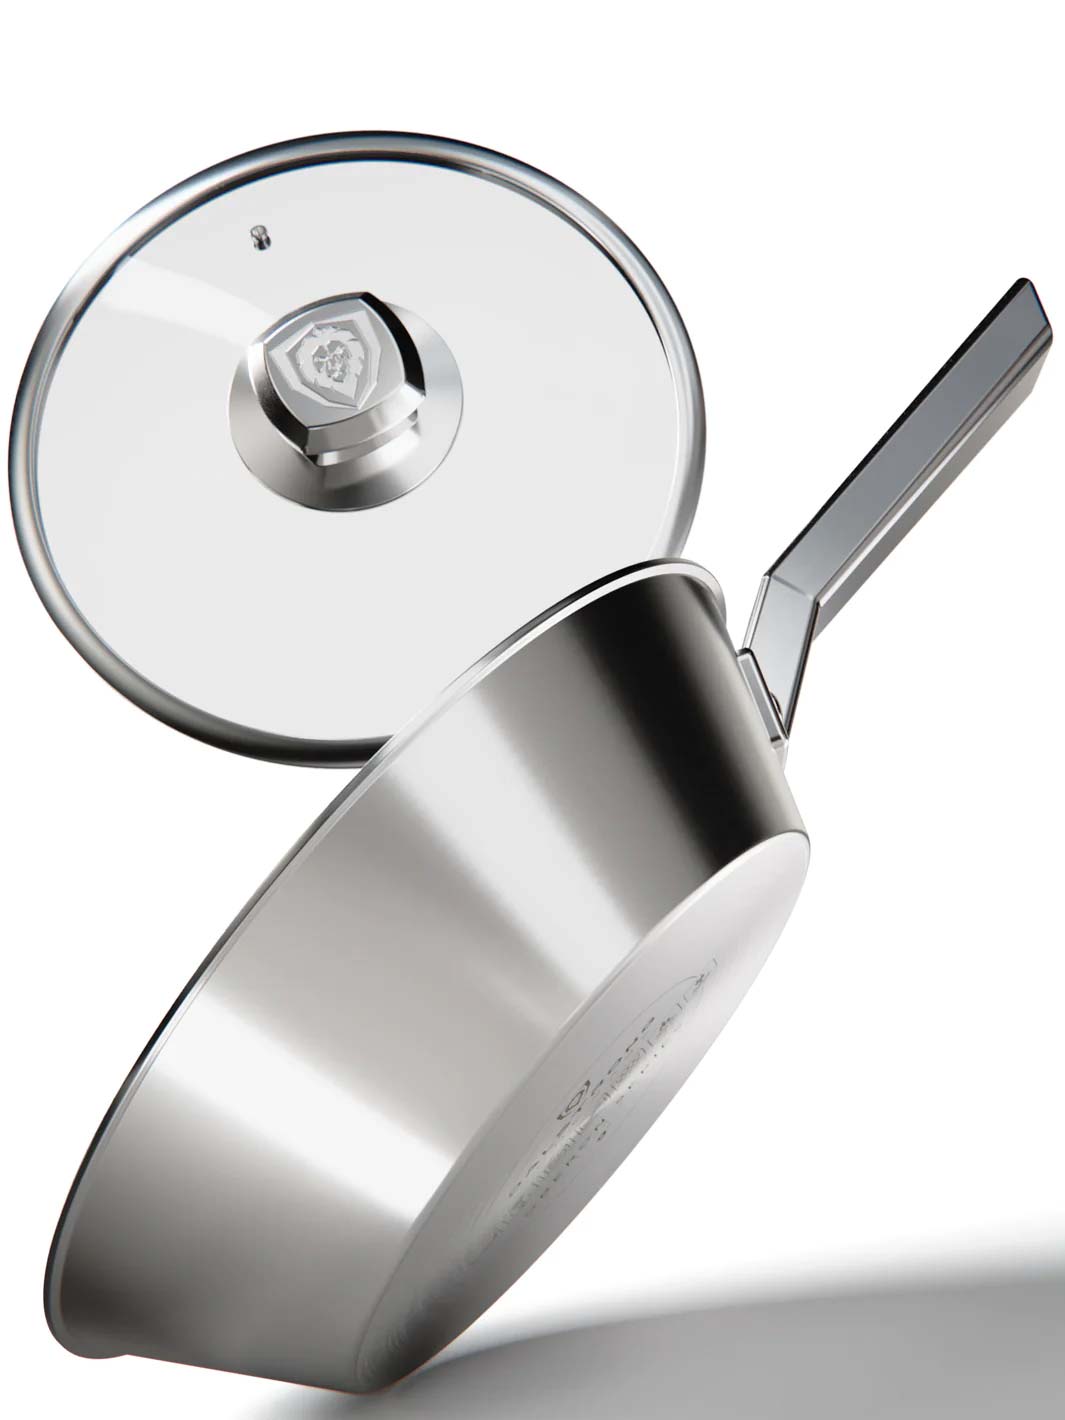 9" Frying Pan & Skillet | Silver | Oberon Series | Dalstrong ©